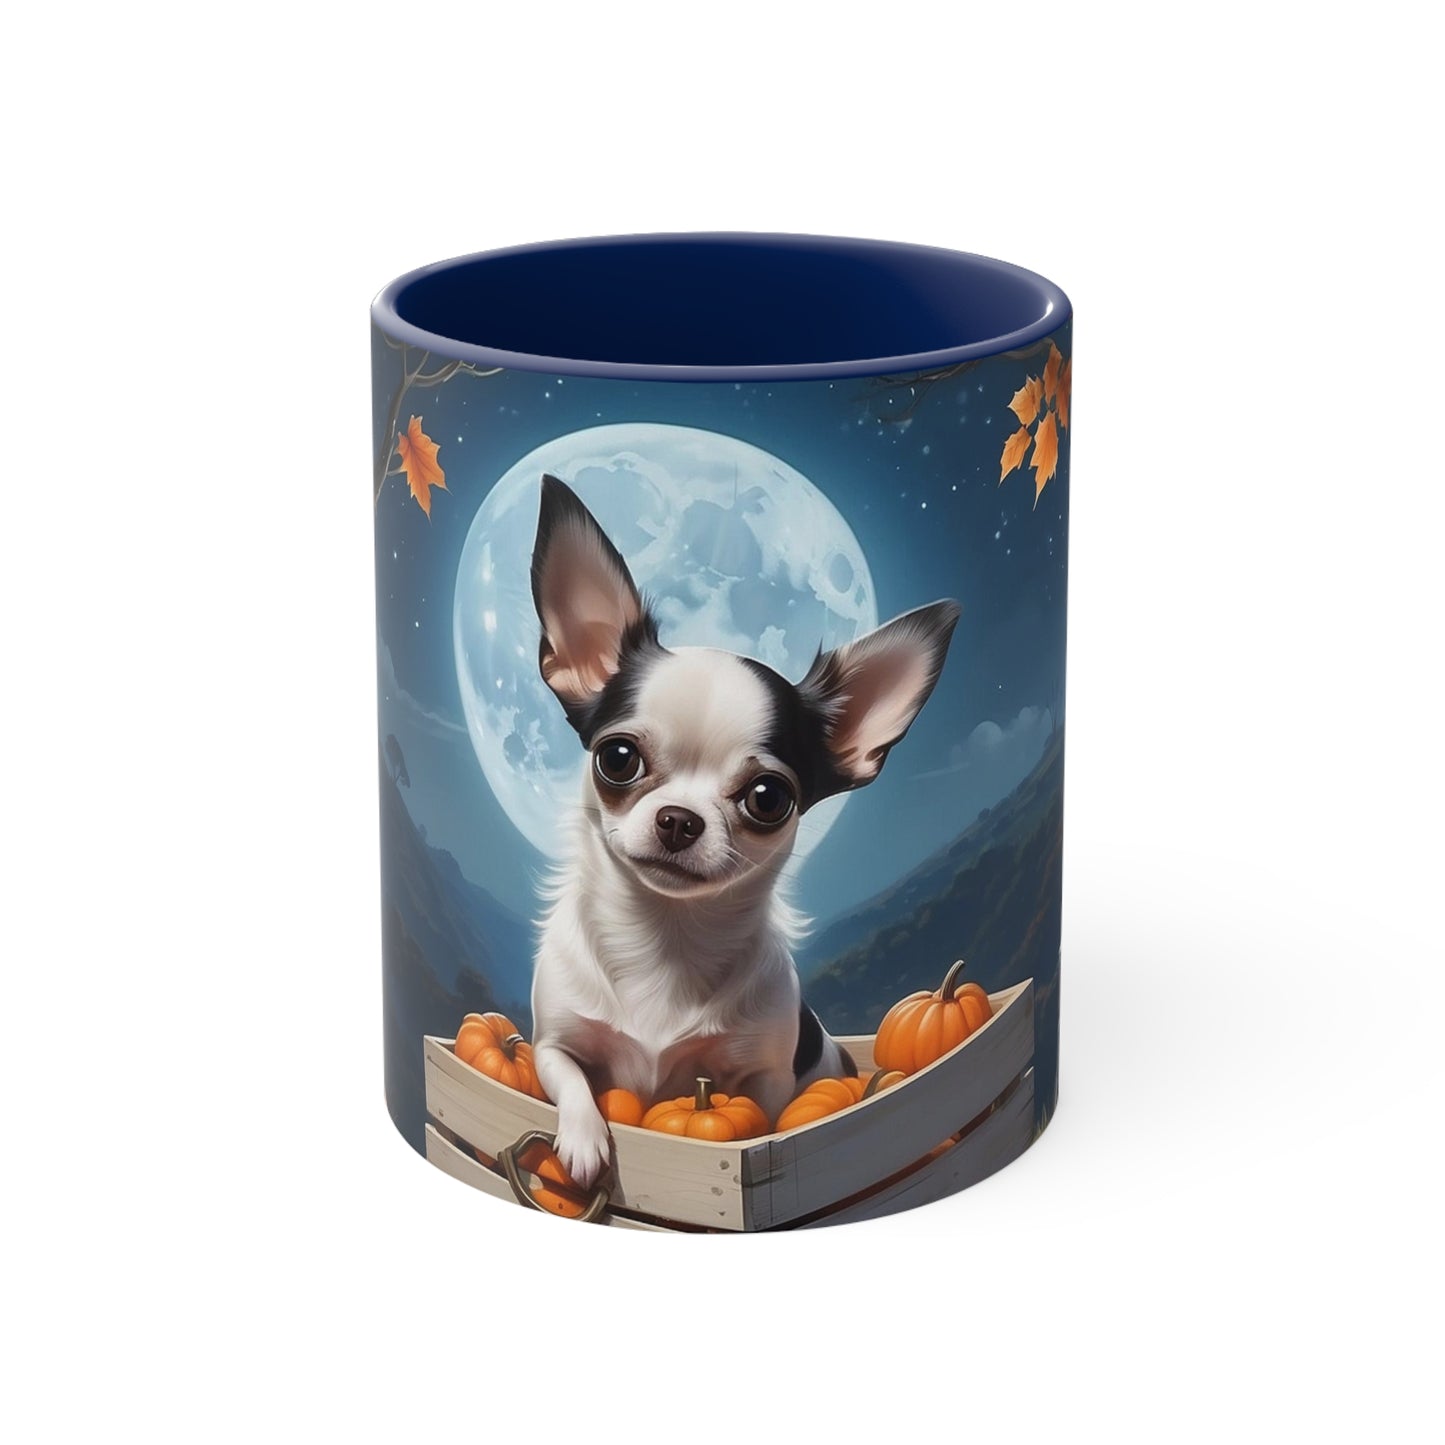 Reo Oh Reo - The Chihuahua- Accent Coffee Mug, 11oz